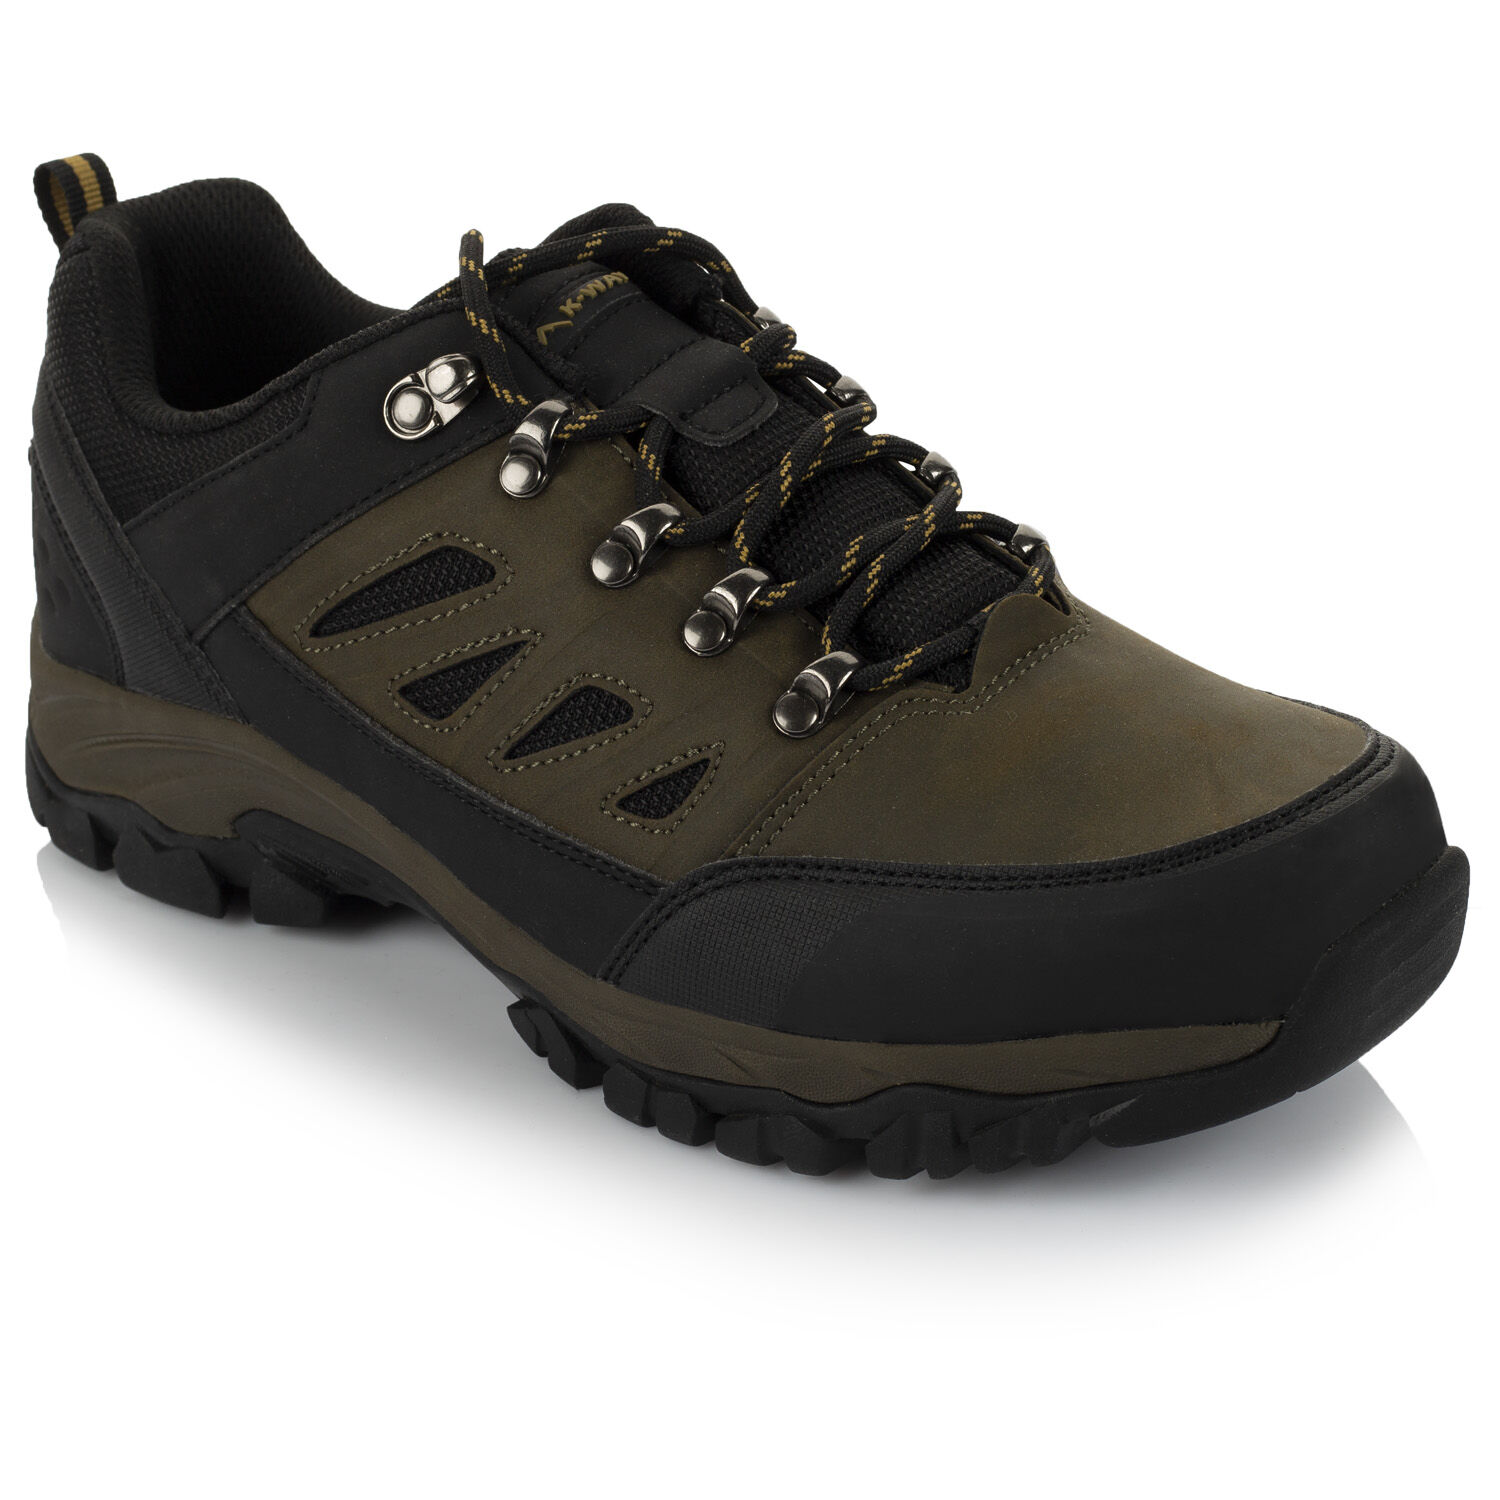 leatherman shoes website